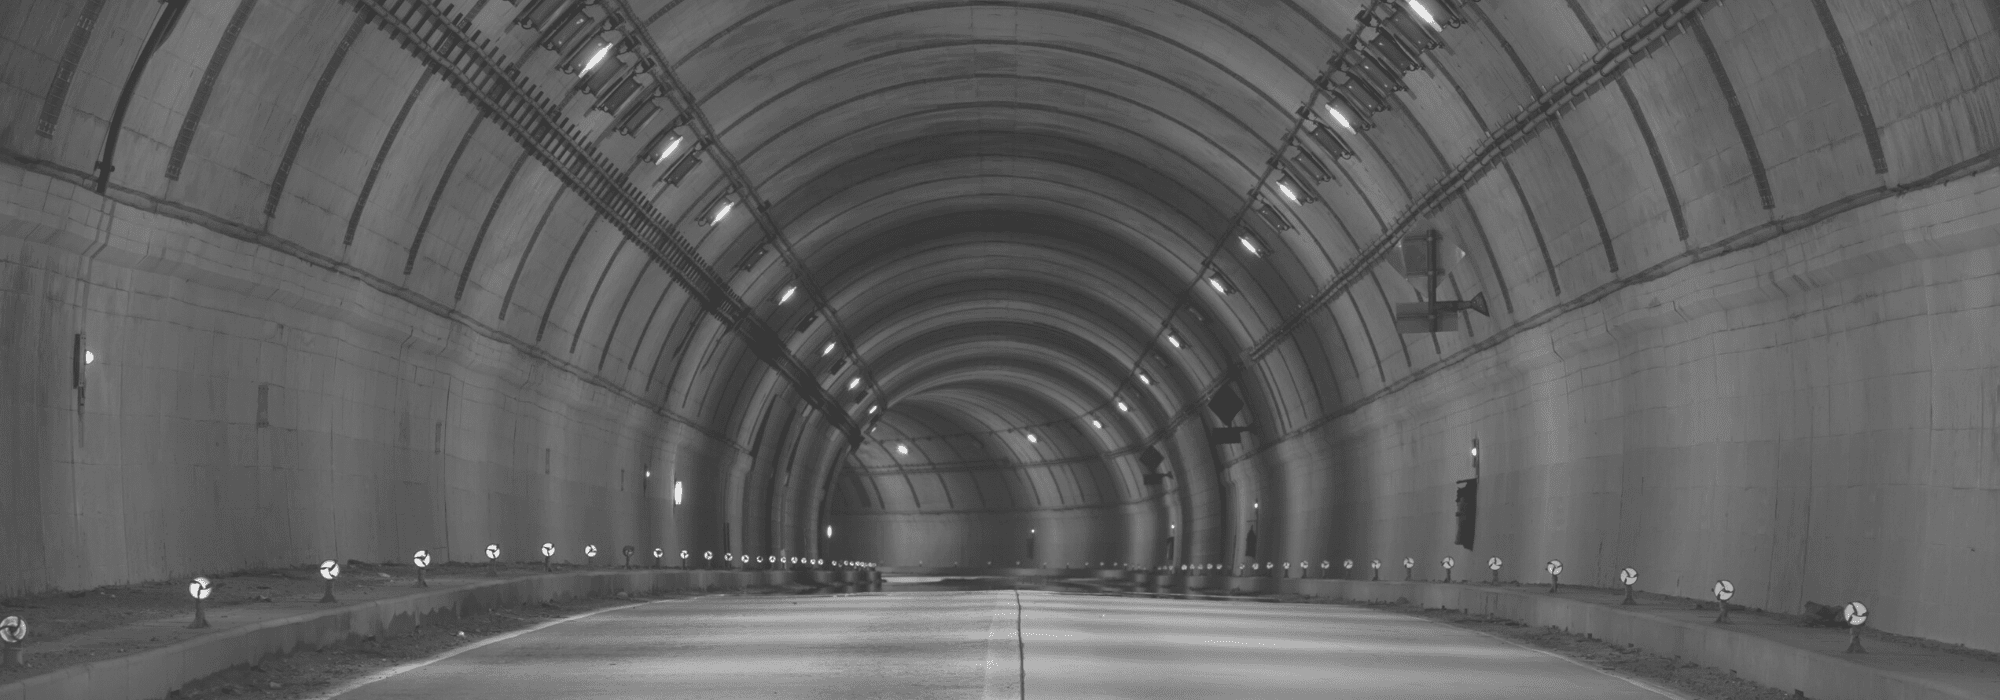 tunnel civil infrastructure roads construction permanent recruitment